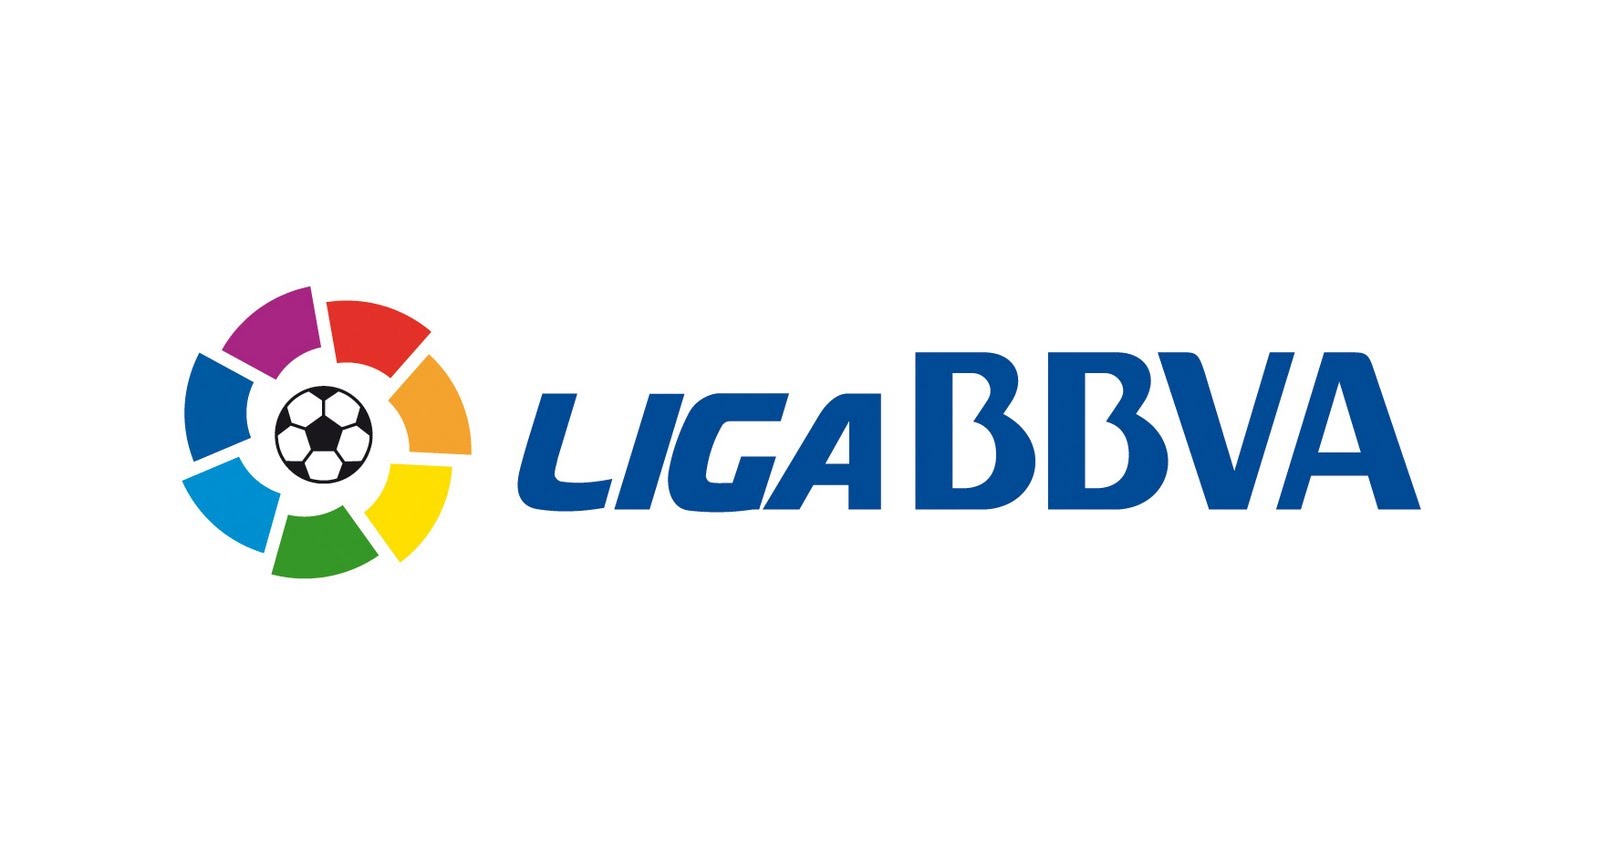 Officielt logo for den spanske La Liga